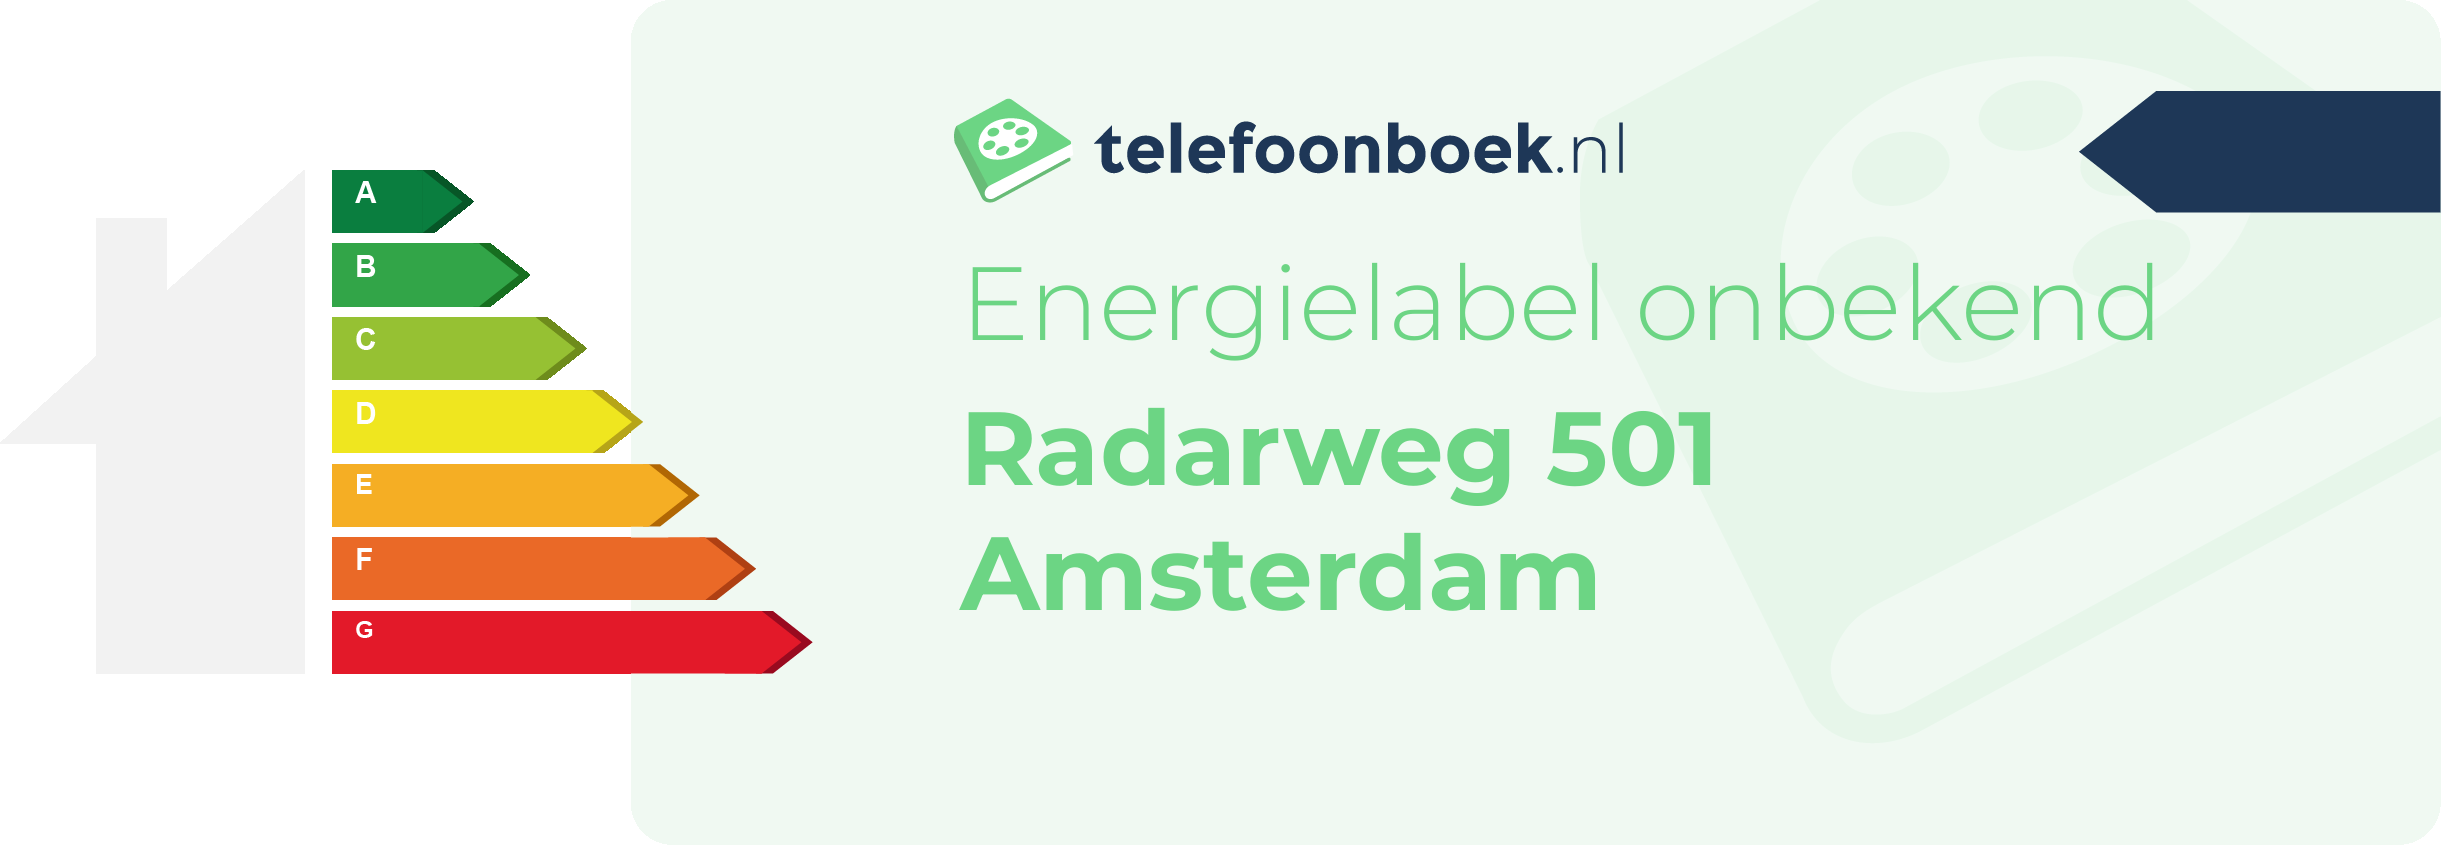 Energielabel Radarweg 501 Amsterdam